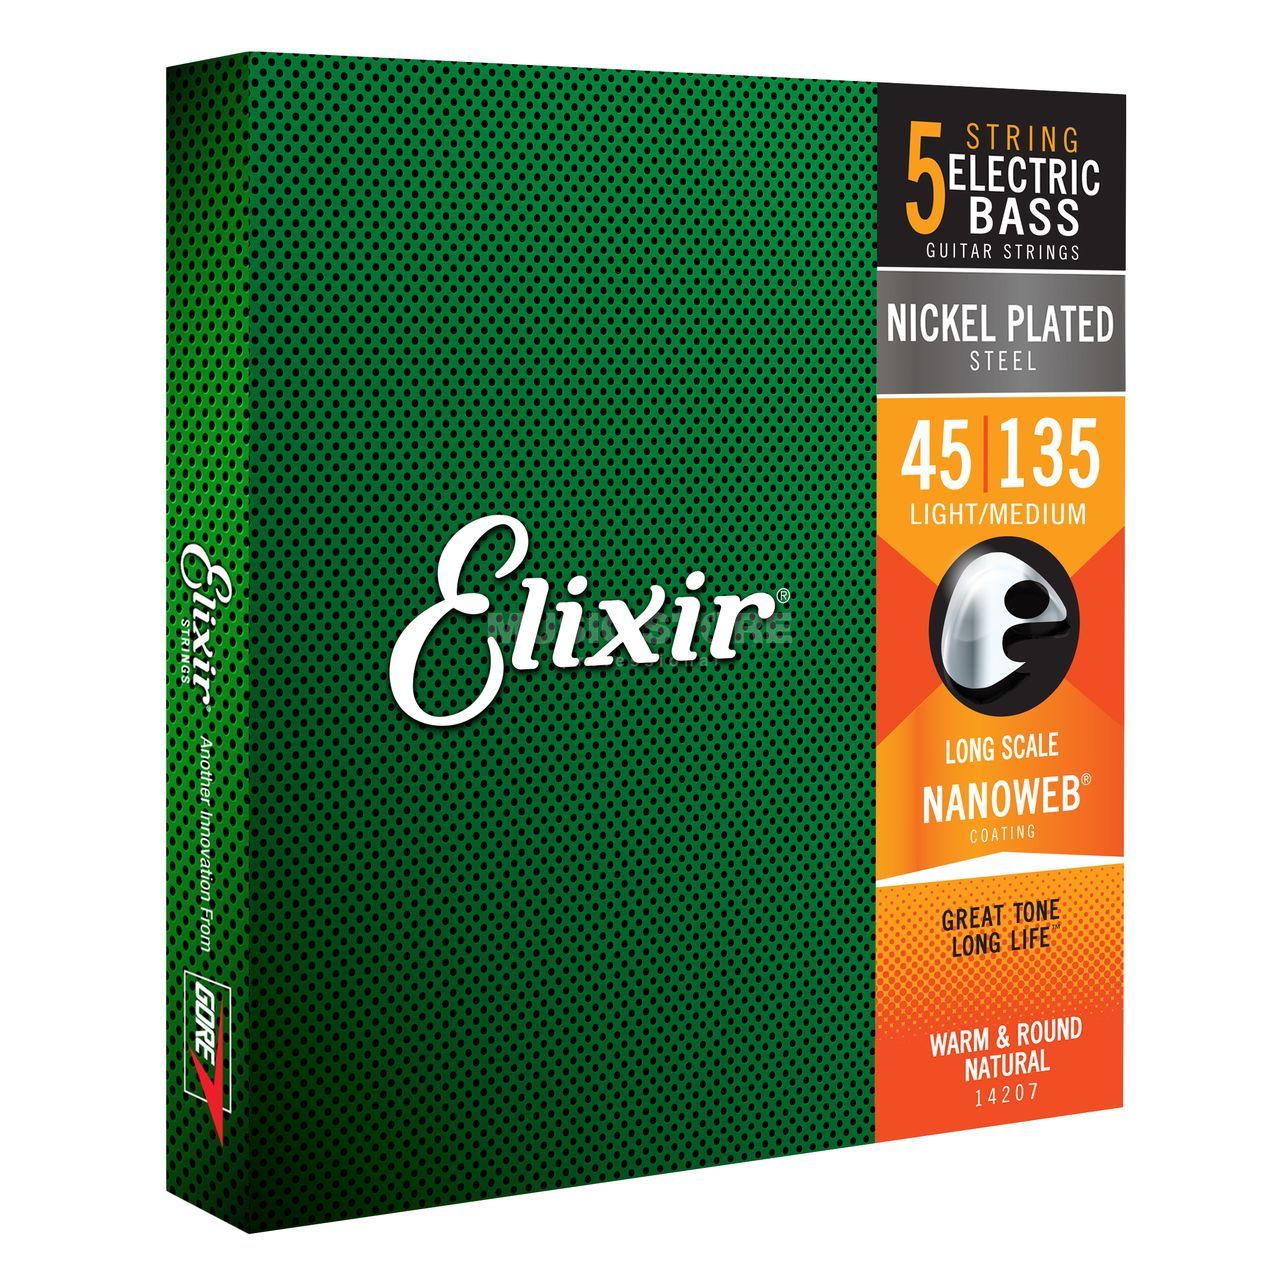 Elixir Strings Nanoweb Electric Bass Guitar Strings -.045-.135 Long Scale, 5-string